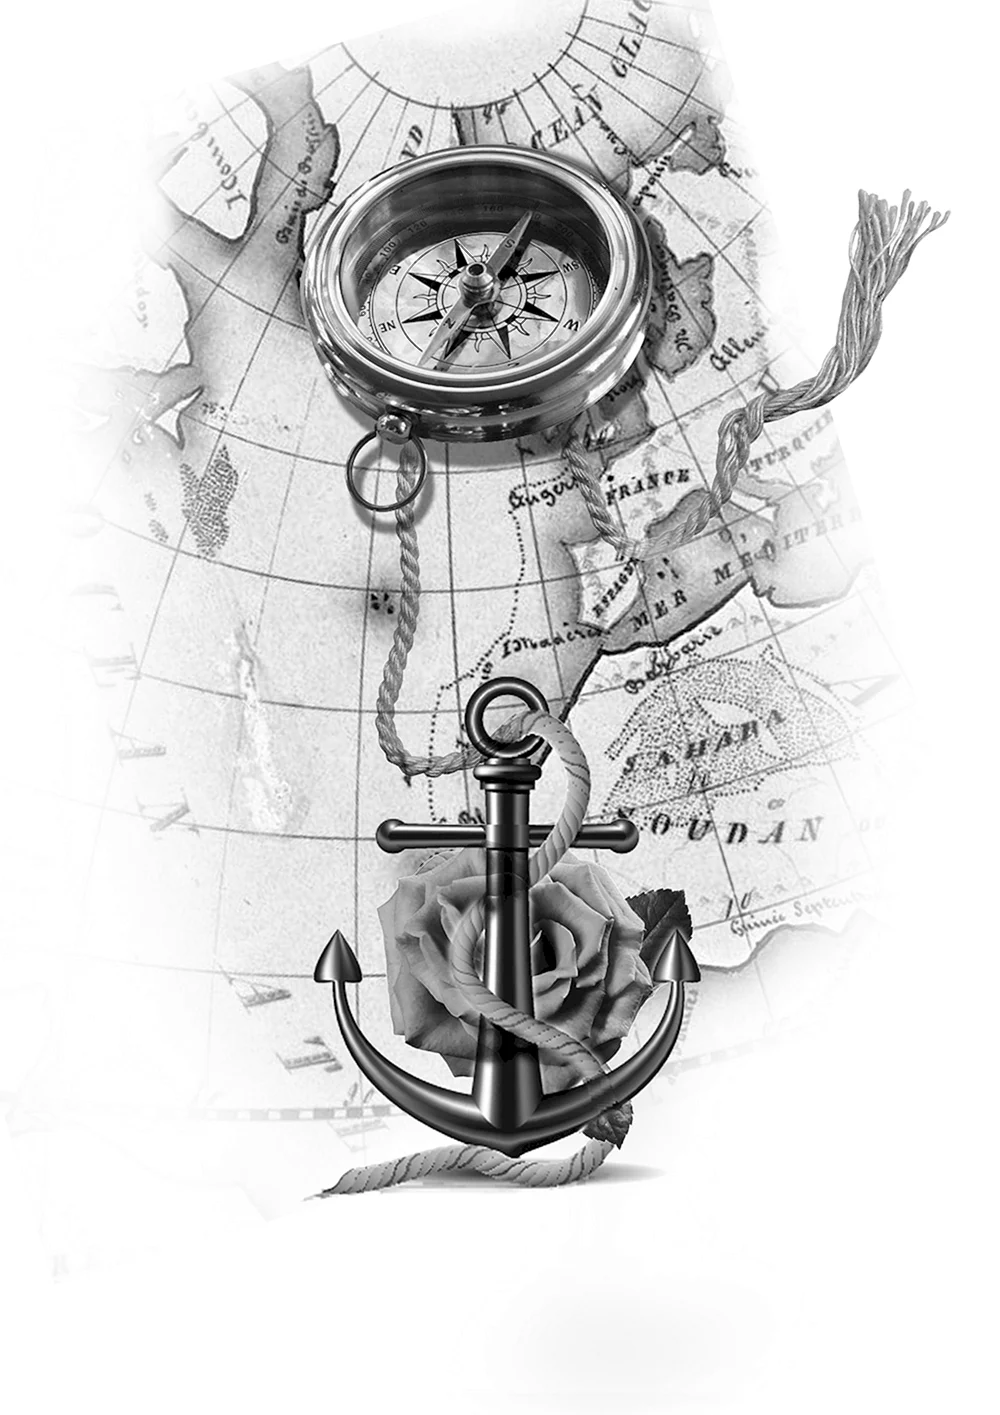 Compass Tattoo Design